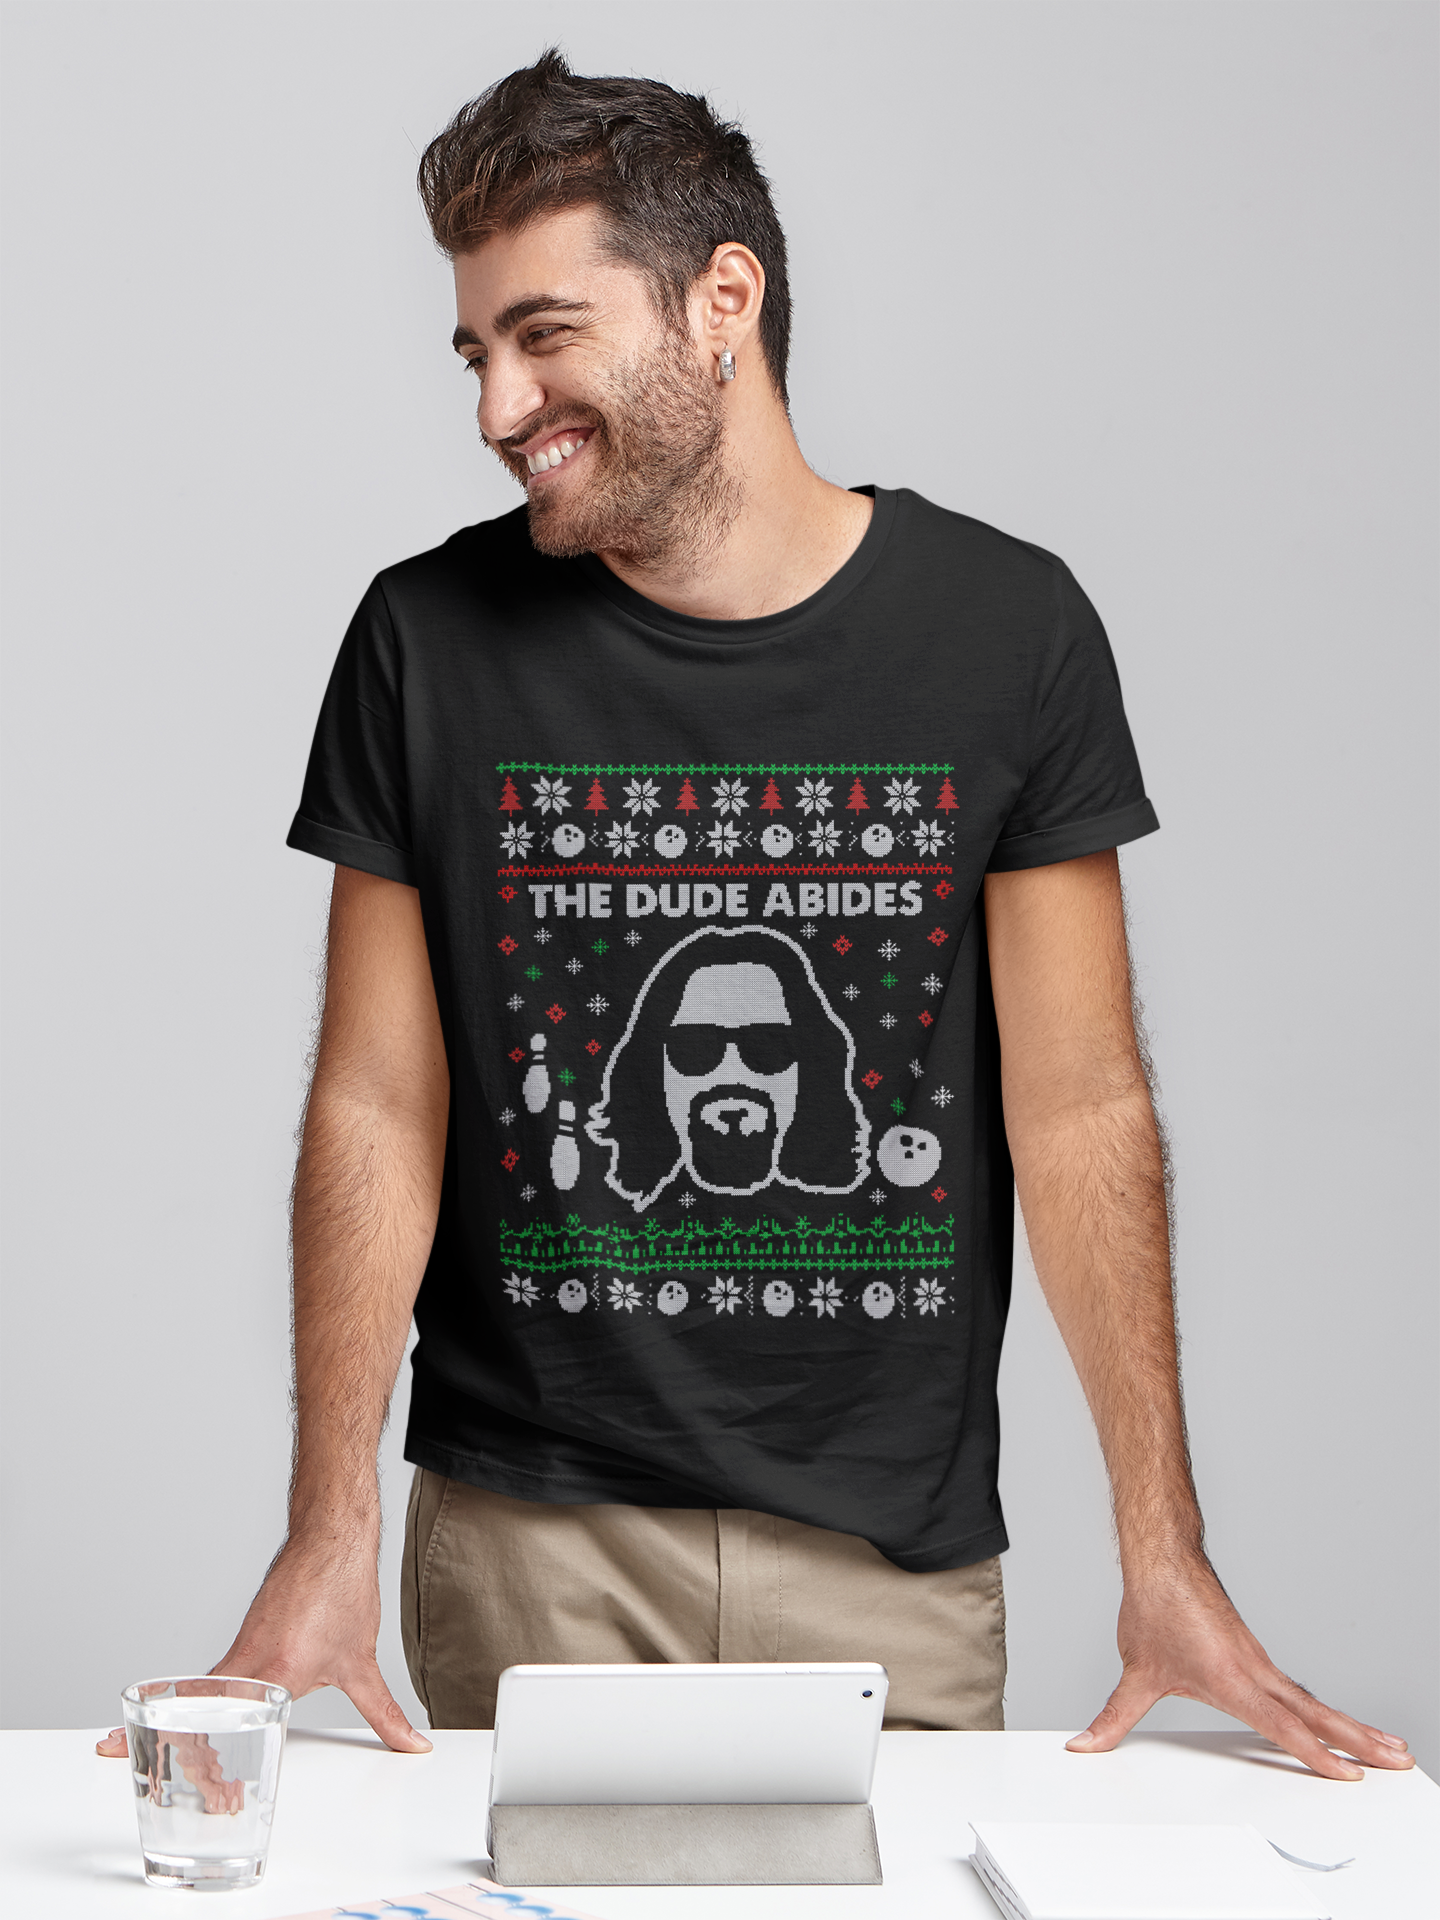 The Big Lebowski Ugly Sweater T Shirt, The Dude Abides Tshirt, The Dude T Shirt, Christmas Gift